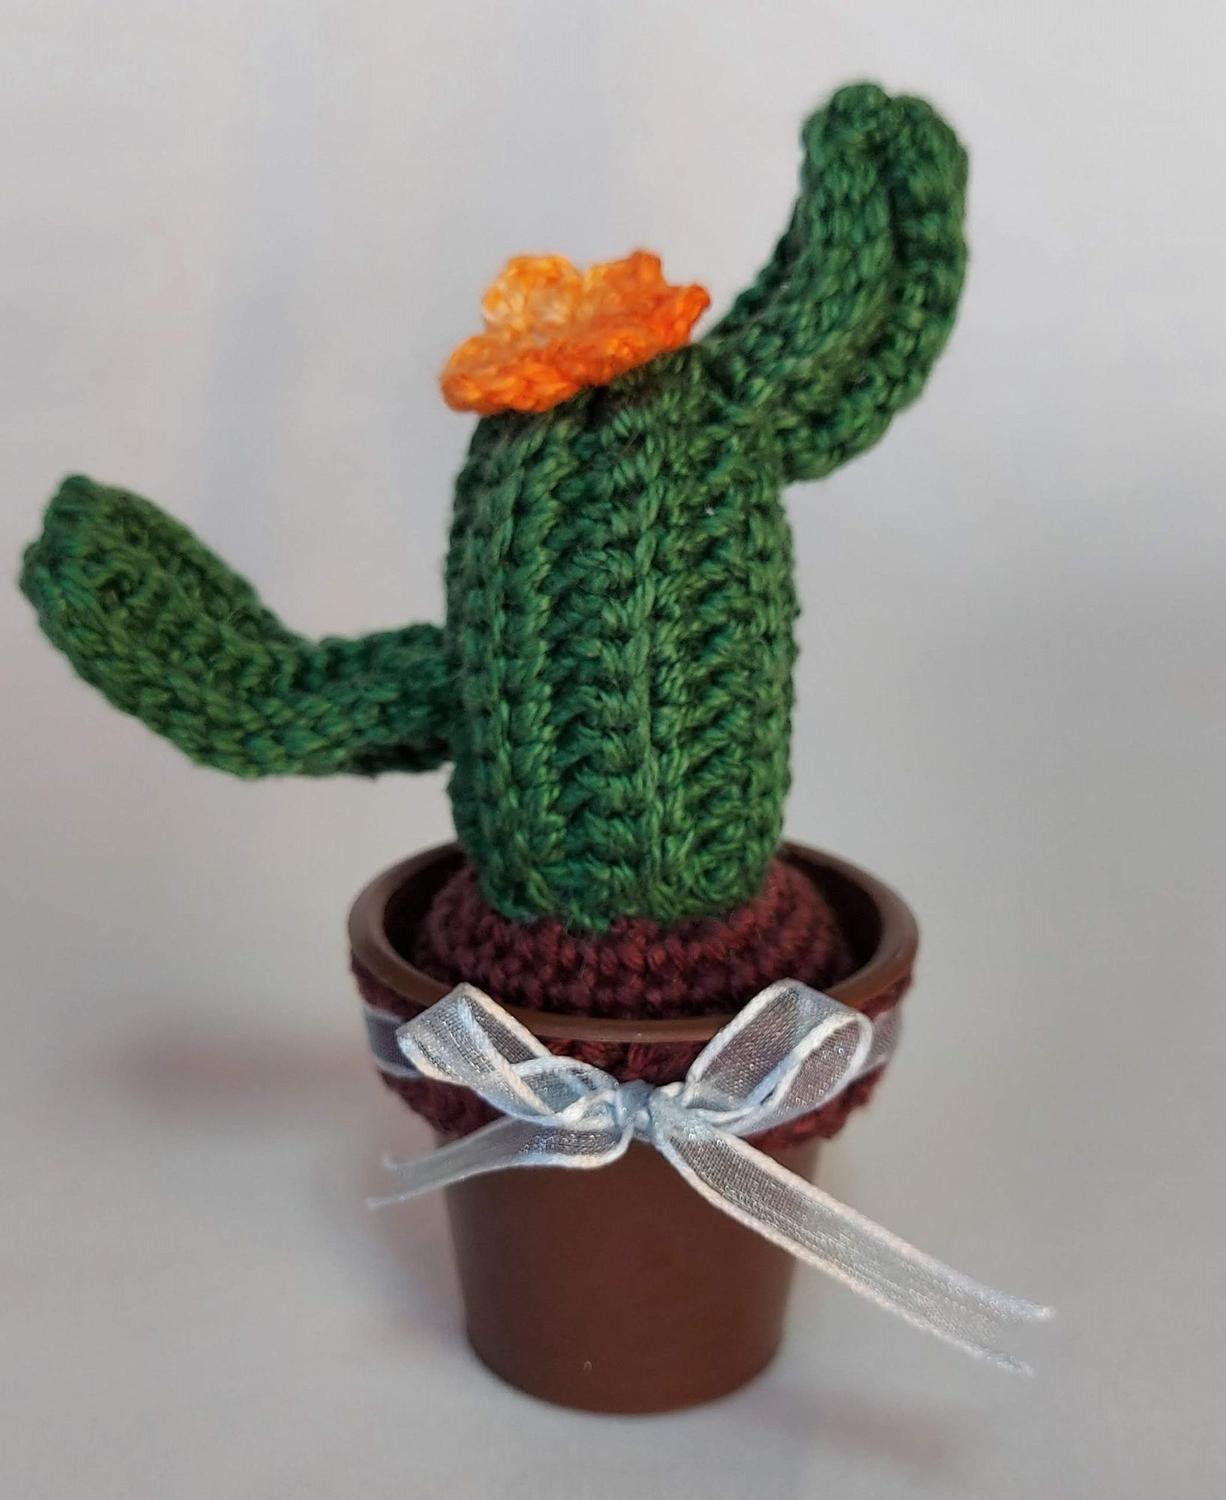 Amigurumi - Cacto pequeno verde duas pontas flor laranja - tam. 10x10x12cm  - 46g - Crochê - Charme de Crochet - Amigurumi - Magazine Luiza